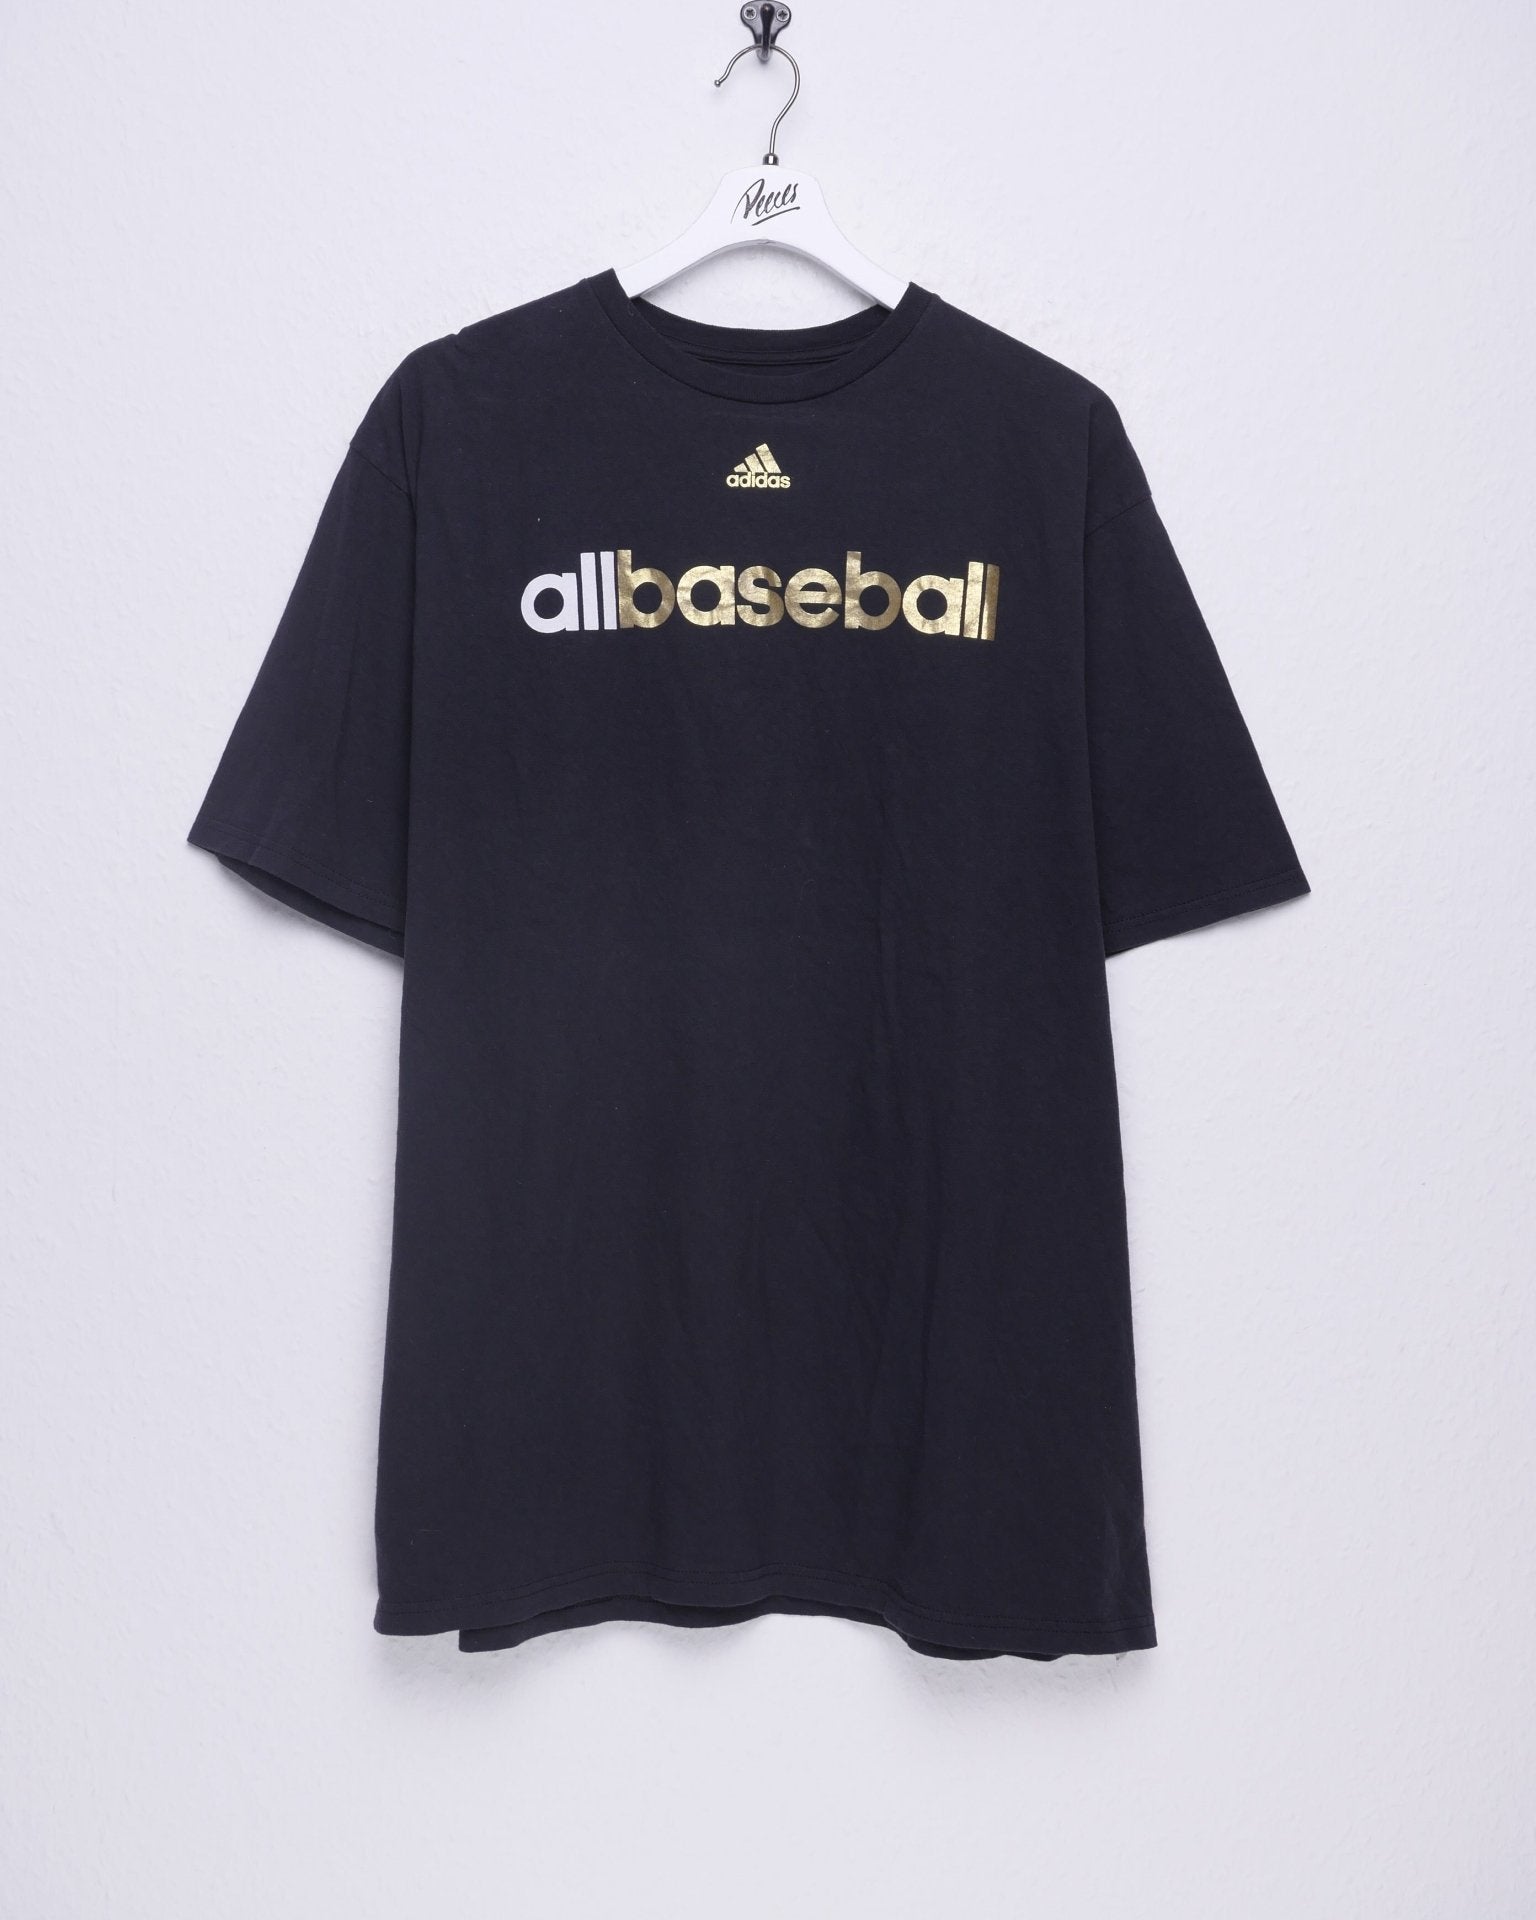 Adidas 'all baseball' printed Logo black Shirt - Peeces